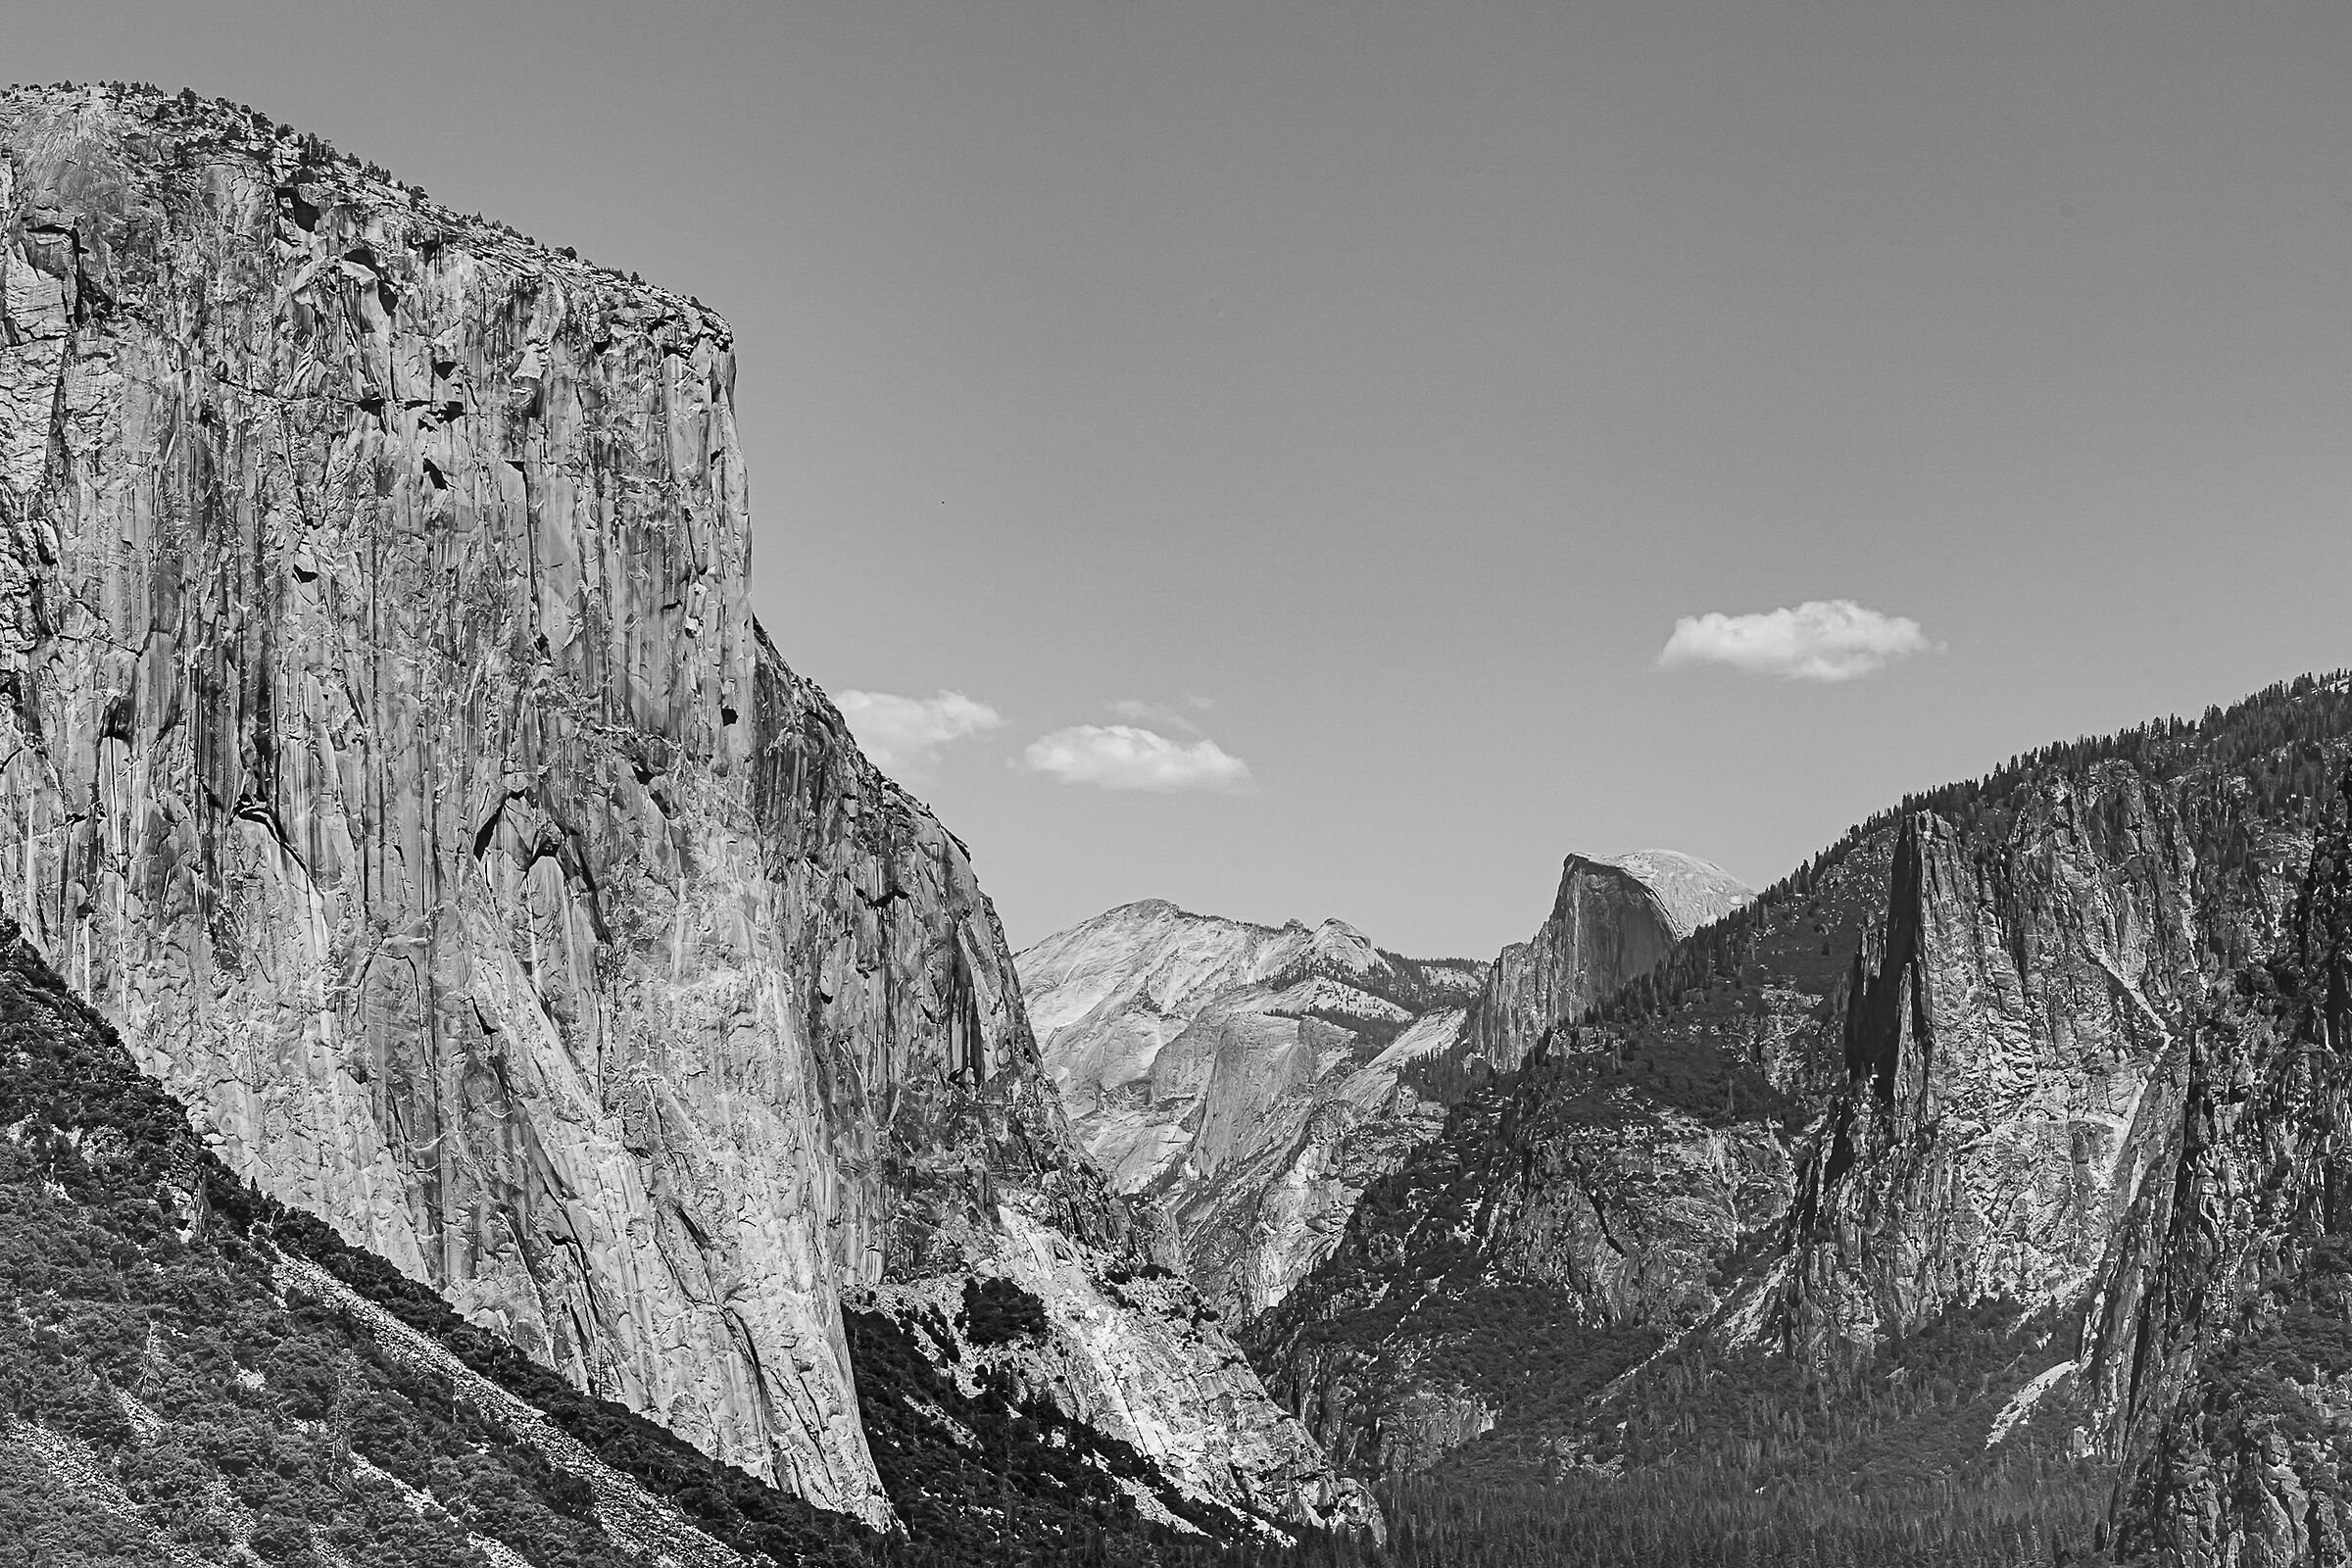 Yosemite np - El Capitan & Half Dome - California 2019...